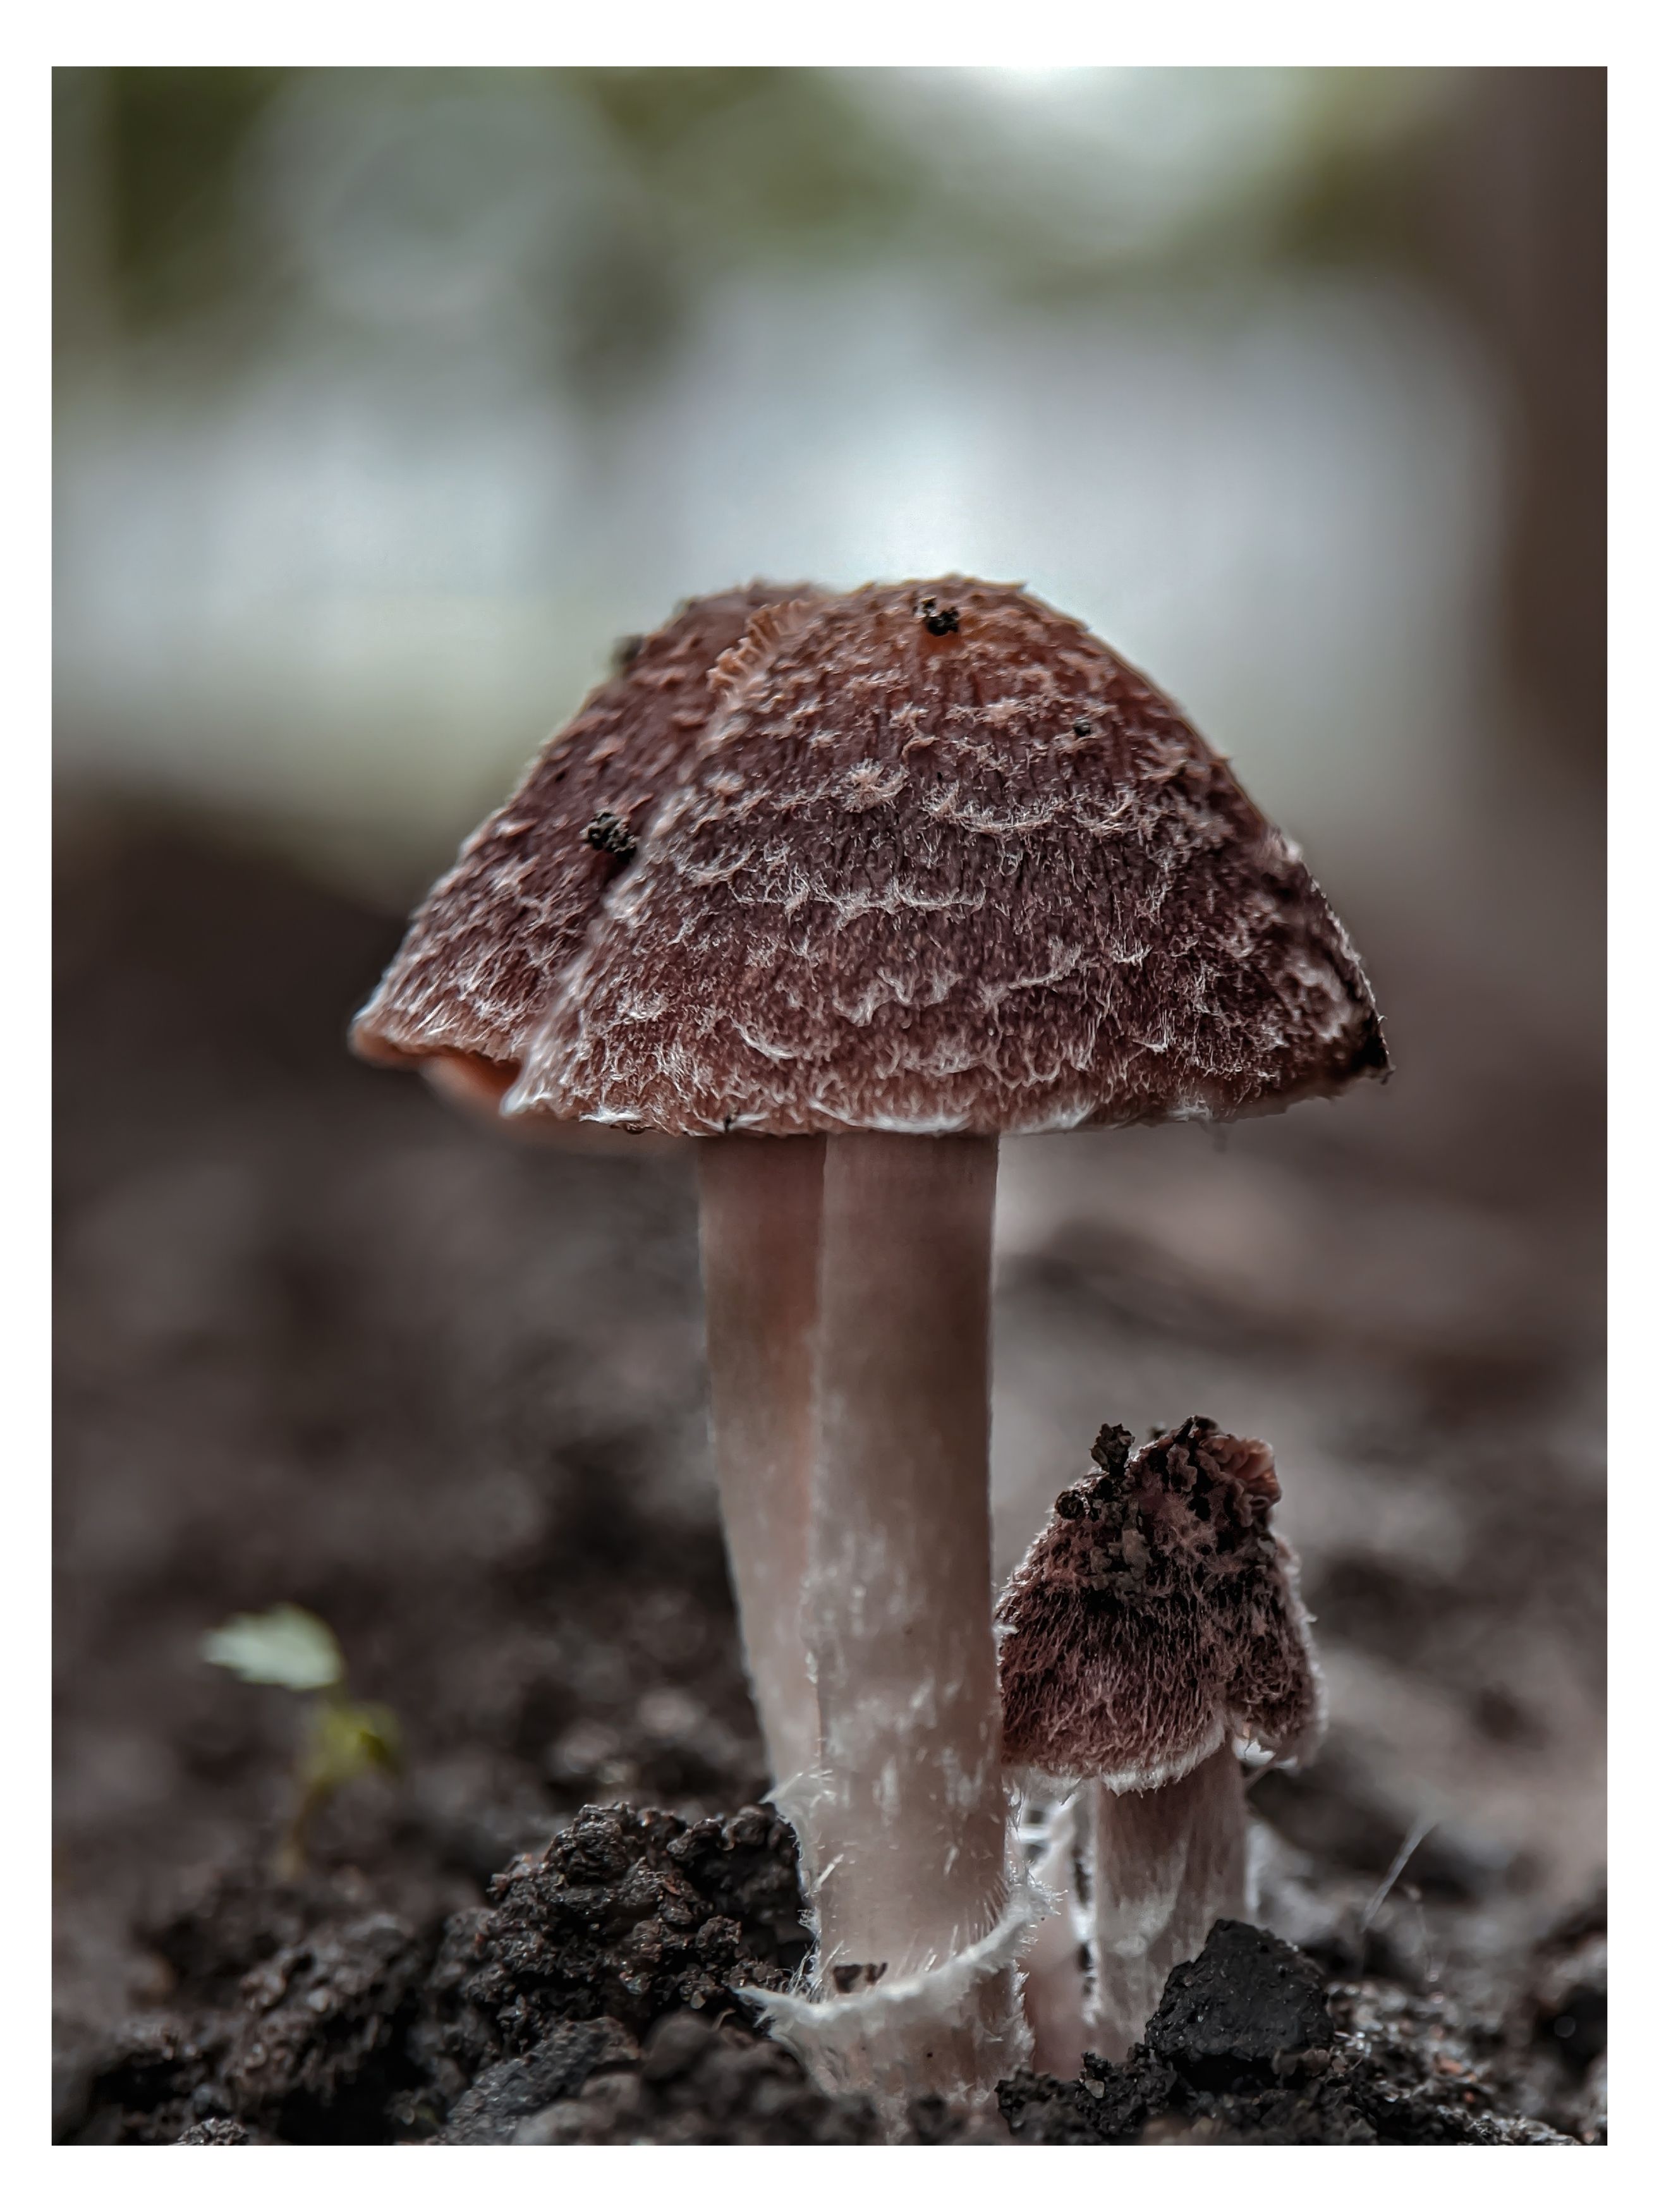 #xiaomi, , #mobilephotography, #macro, #mushroom, #fungi, #nature, Qvaraia Rati